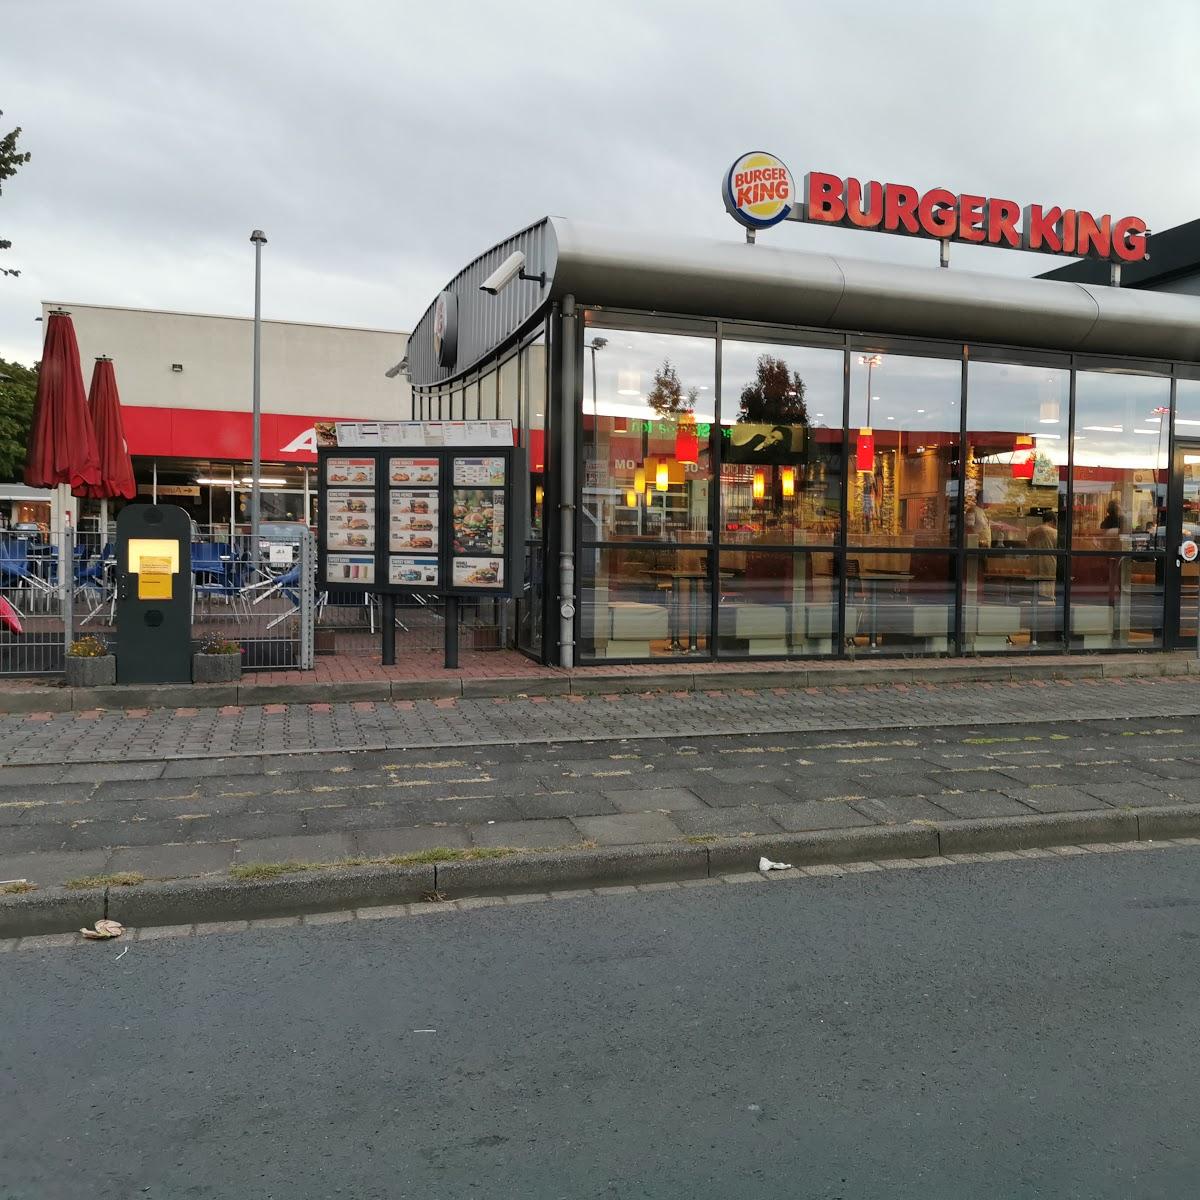 Restaurant "Burger King" in  Hennef